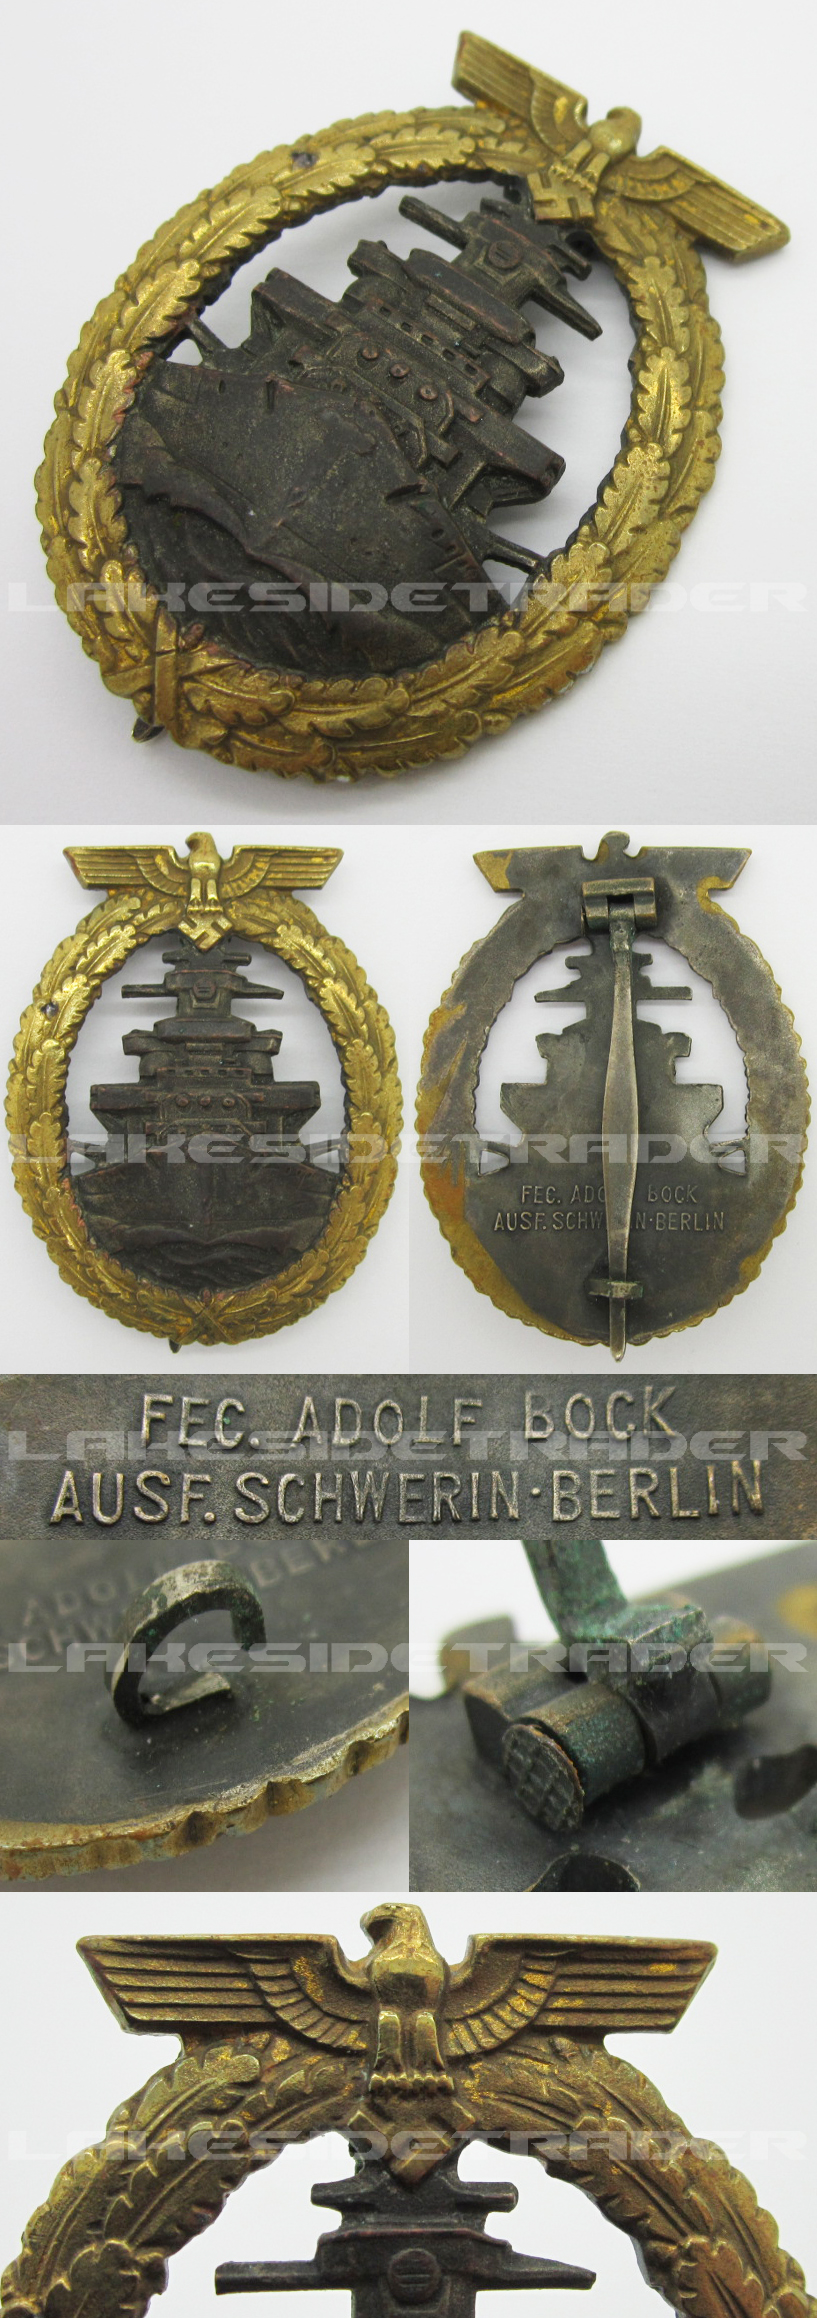 High Seas Fleet Badge by Schwerin